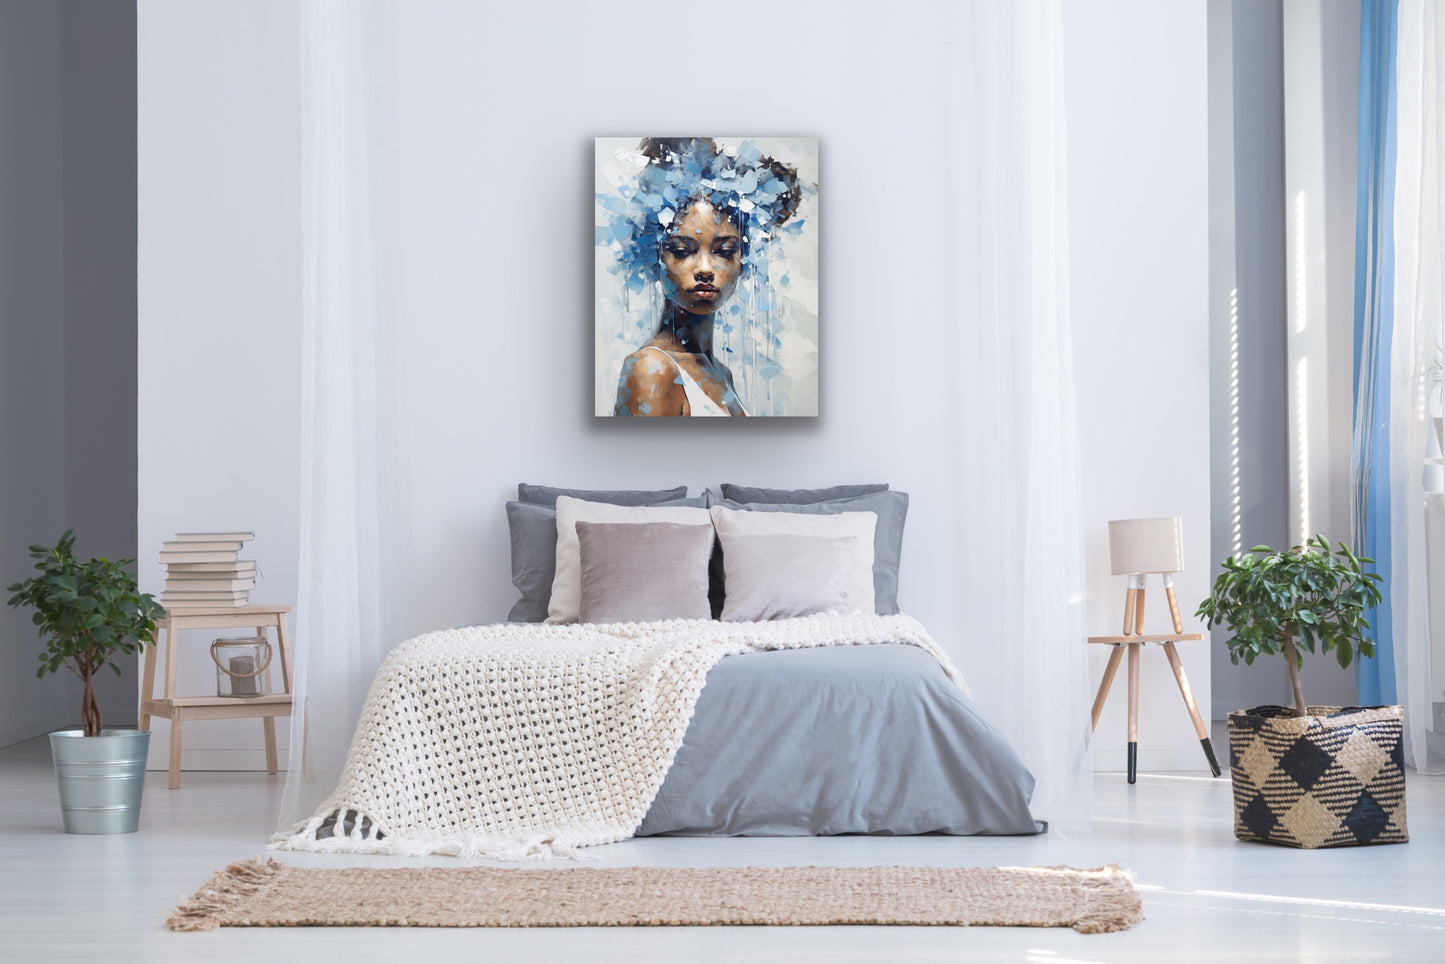 Beautiful Blue | Stretched Canvas Print Wall Art | Black Art | African American Art